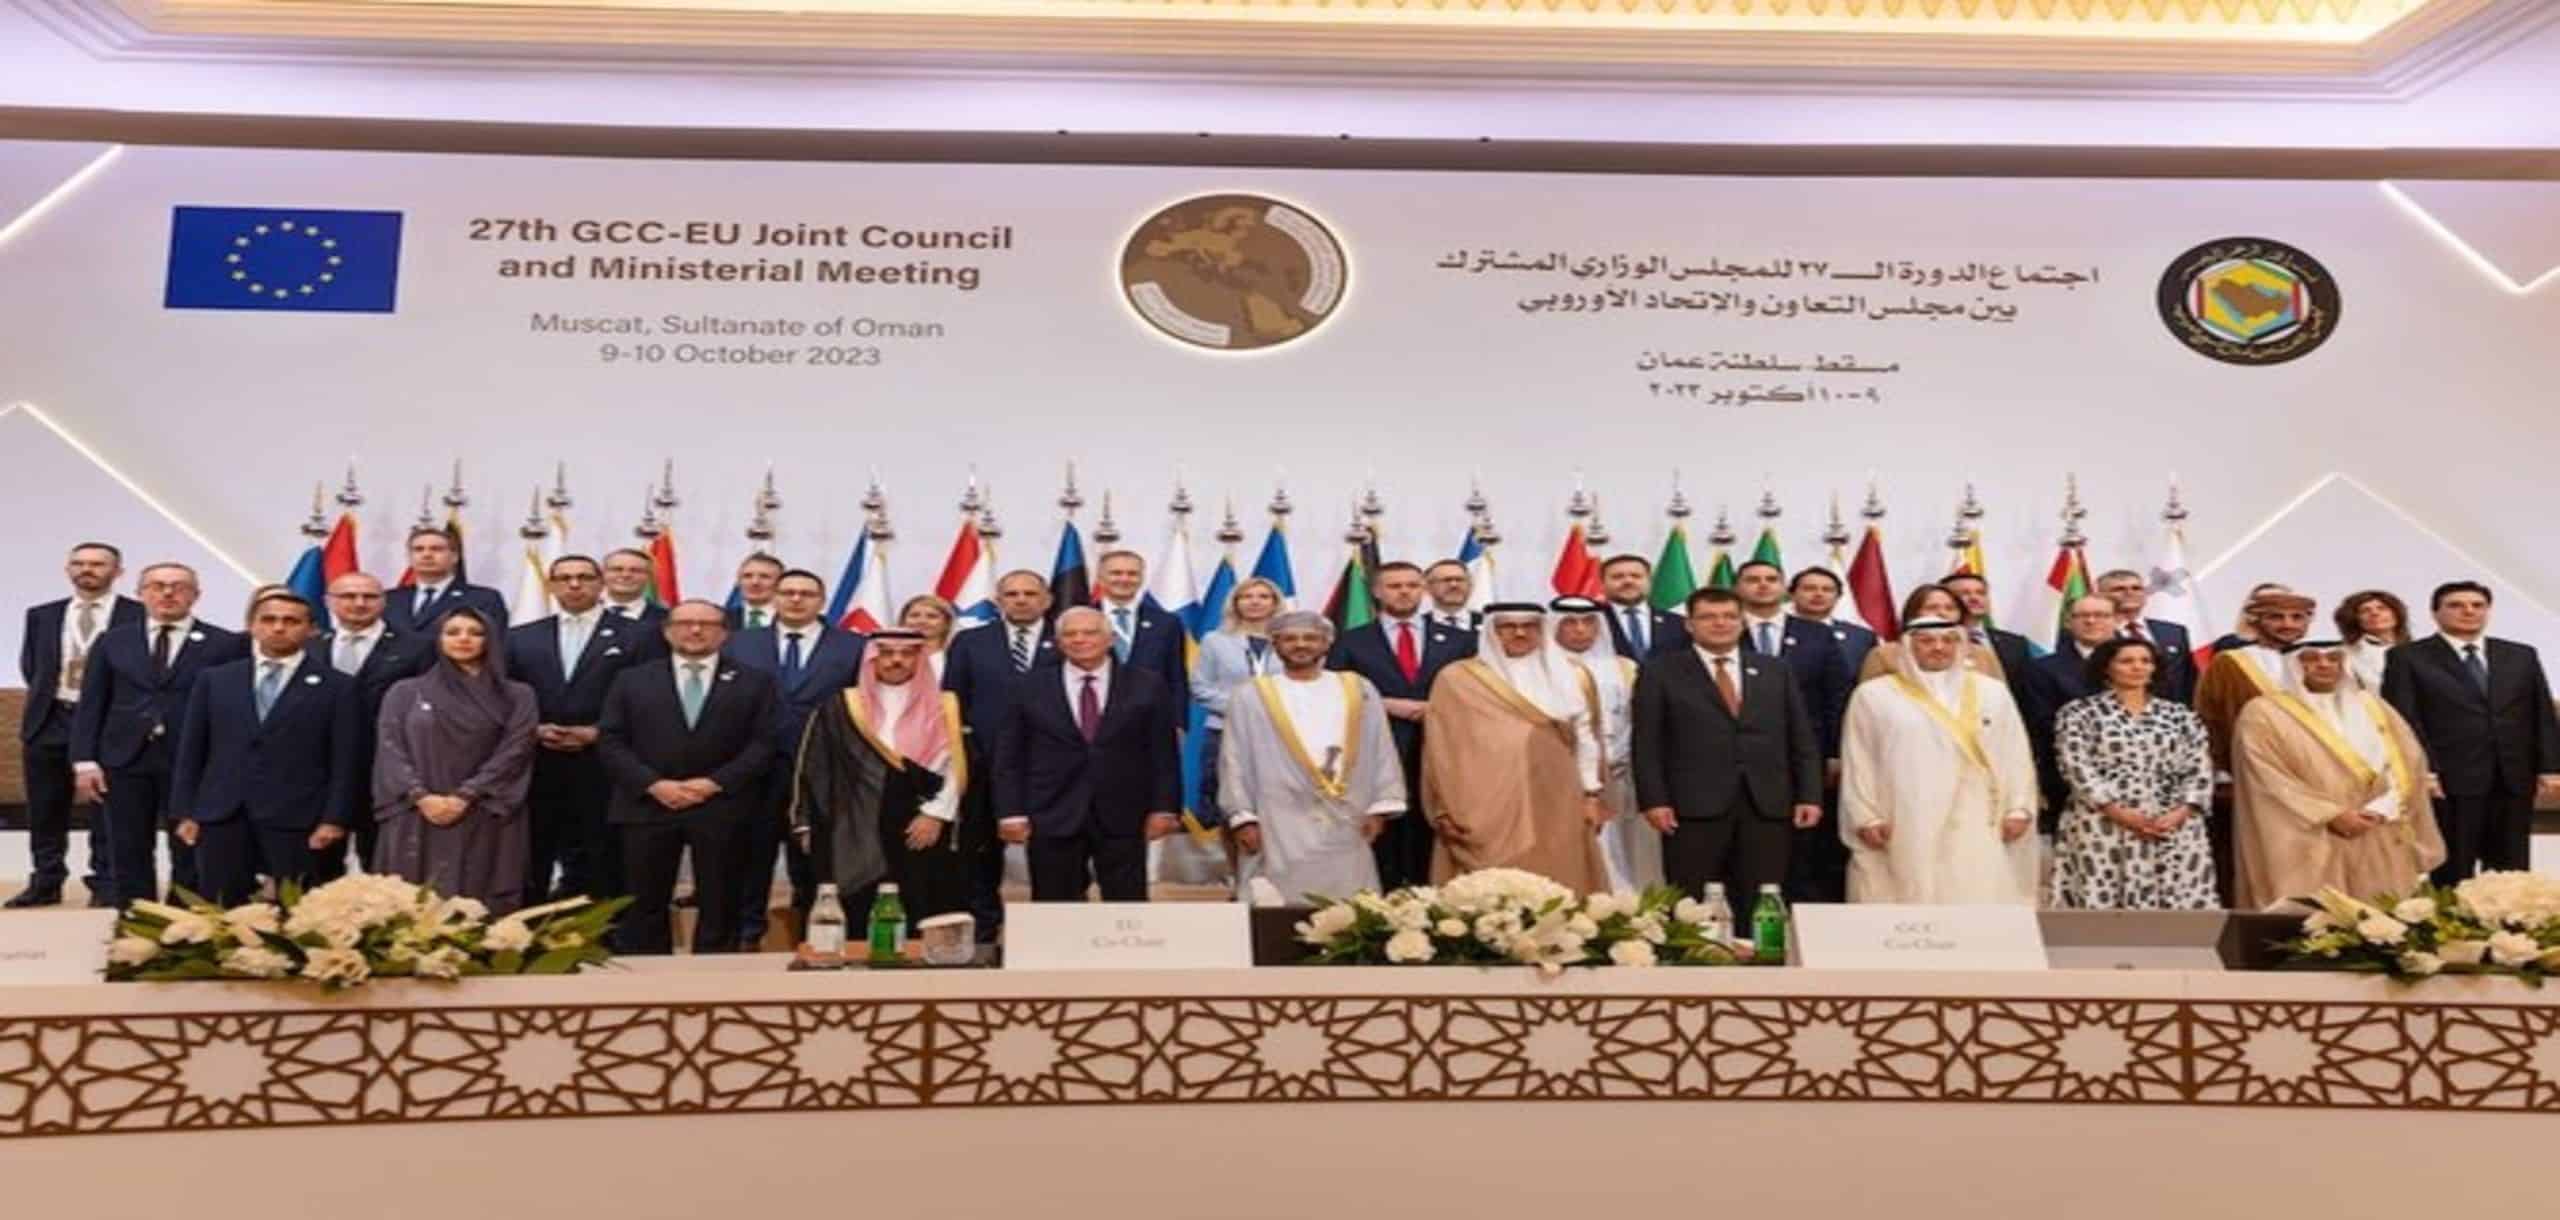 Saudi participates in 27th session of EU-GCC joint council in Oman